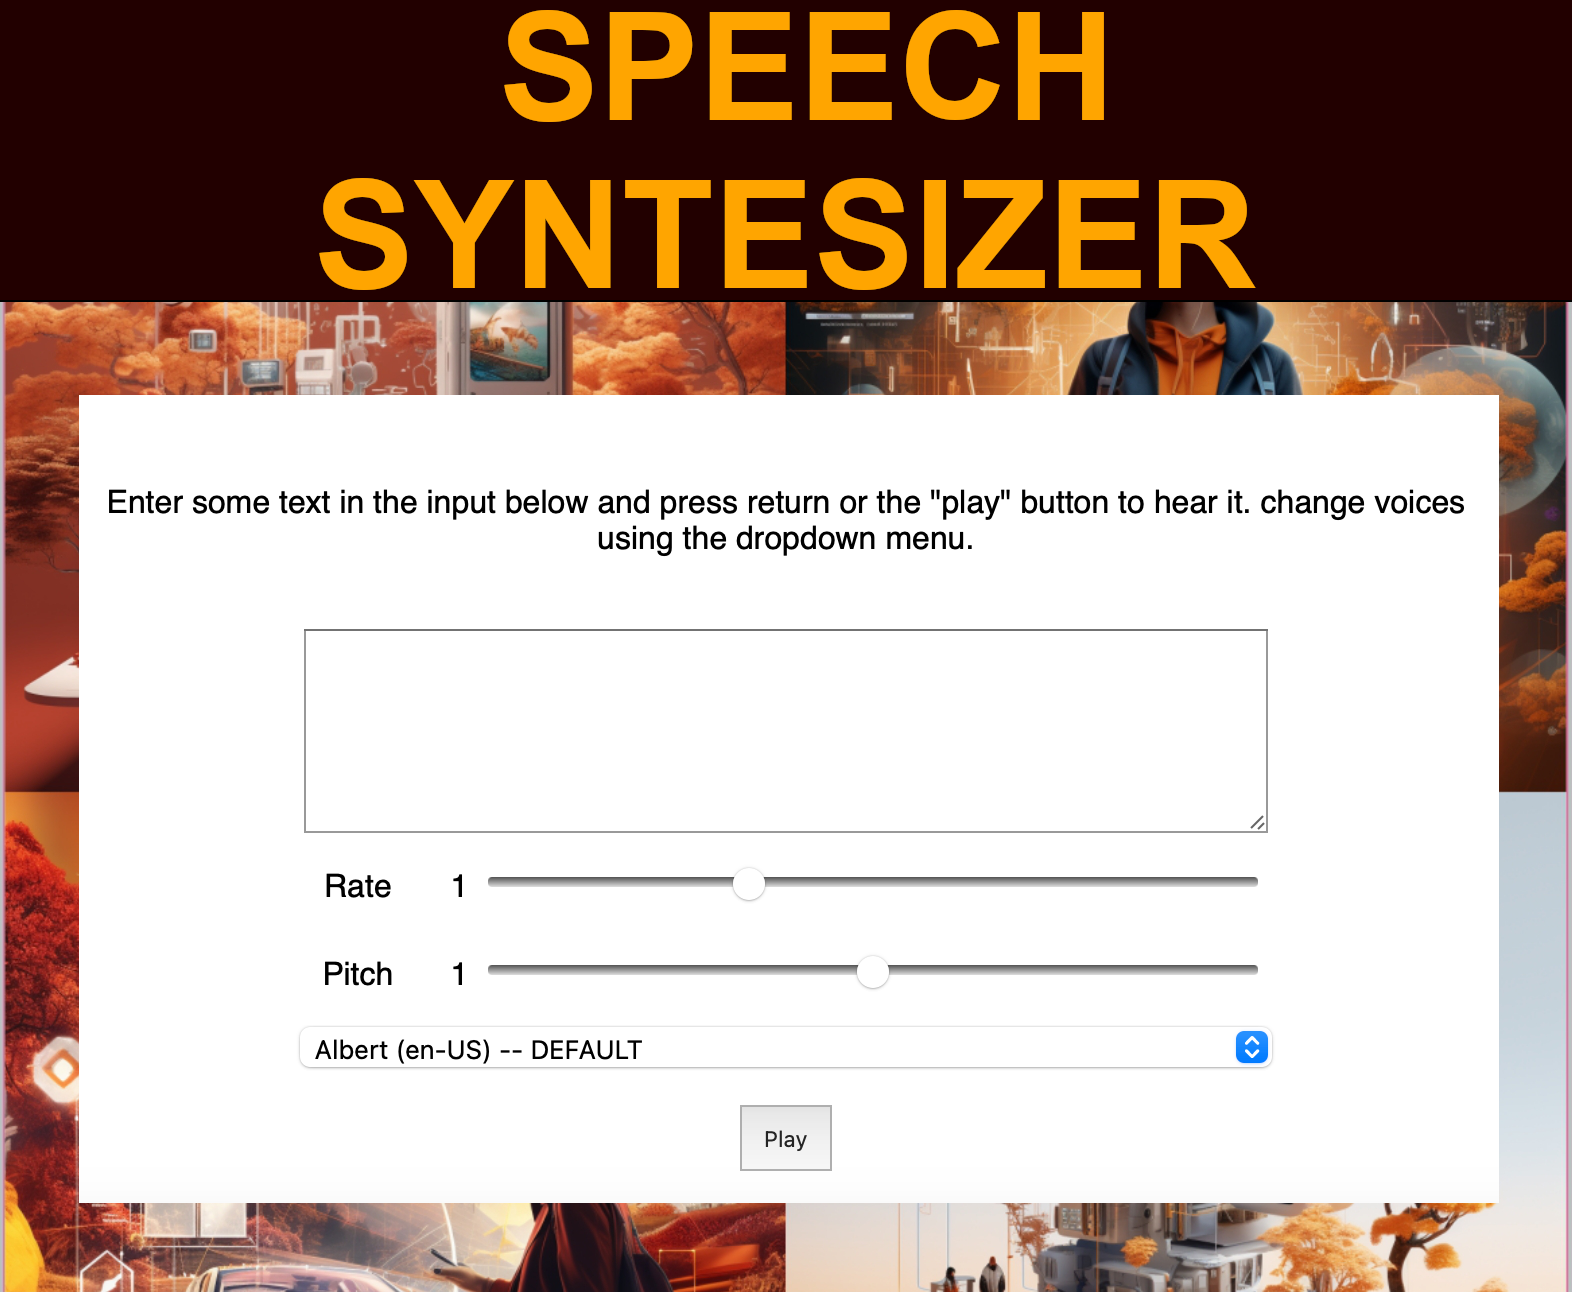 Speech Syntesizer App